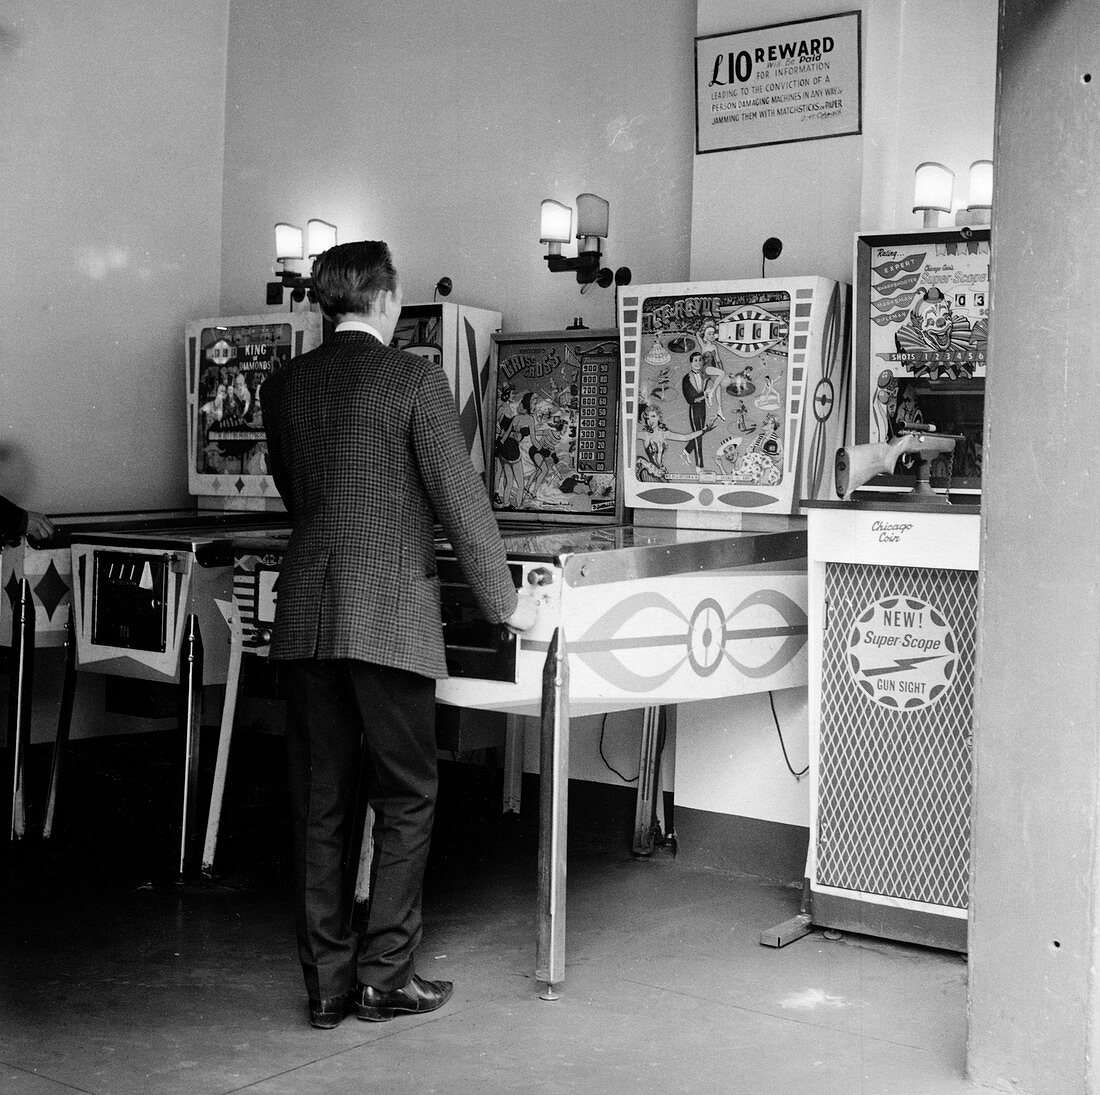 Man playing pinball in a London amusement arcade, c1966-67